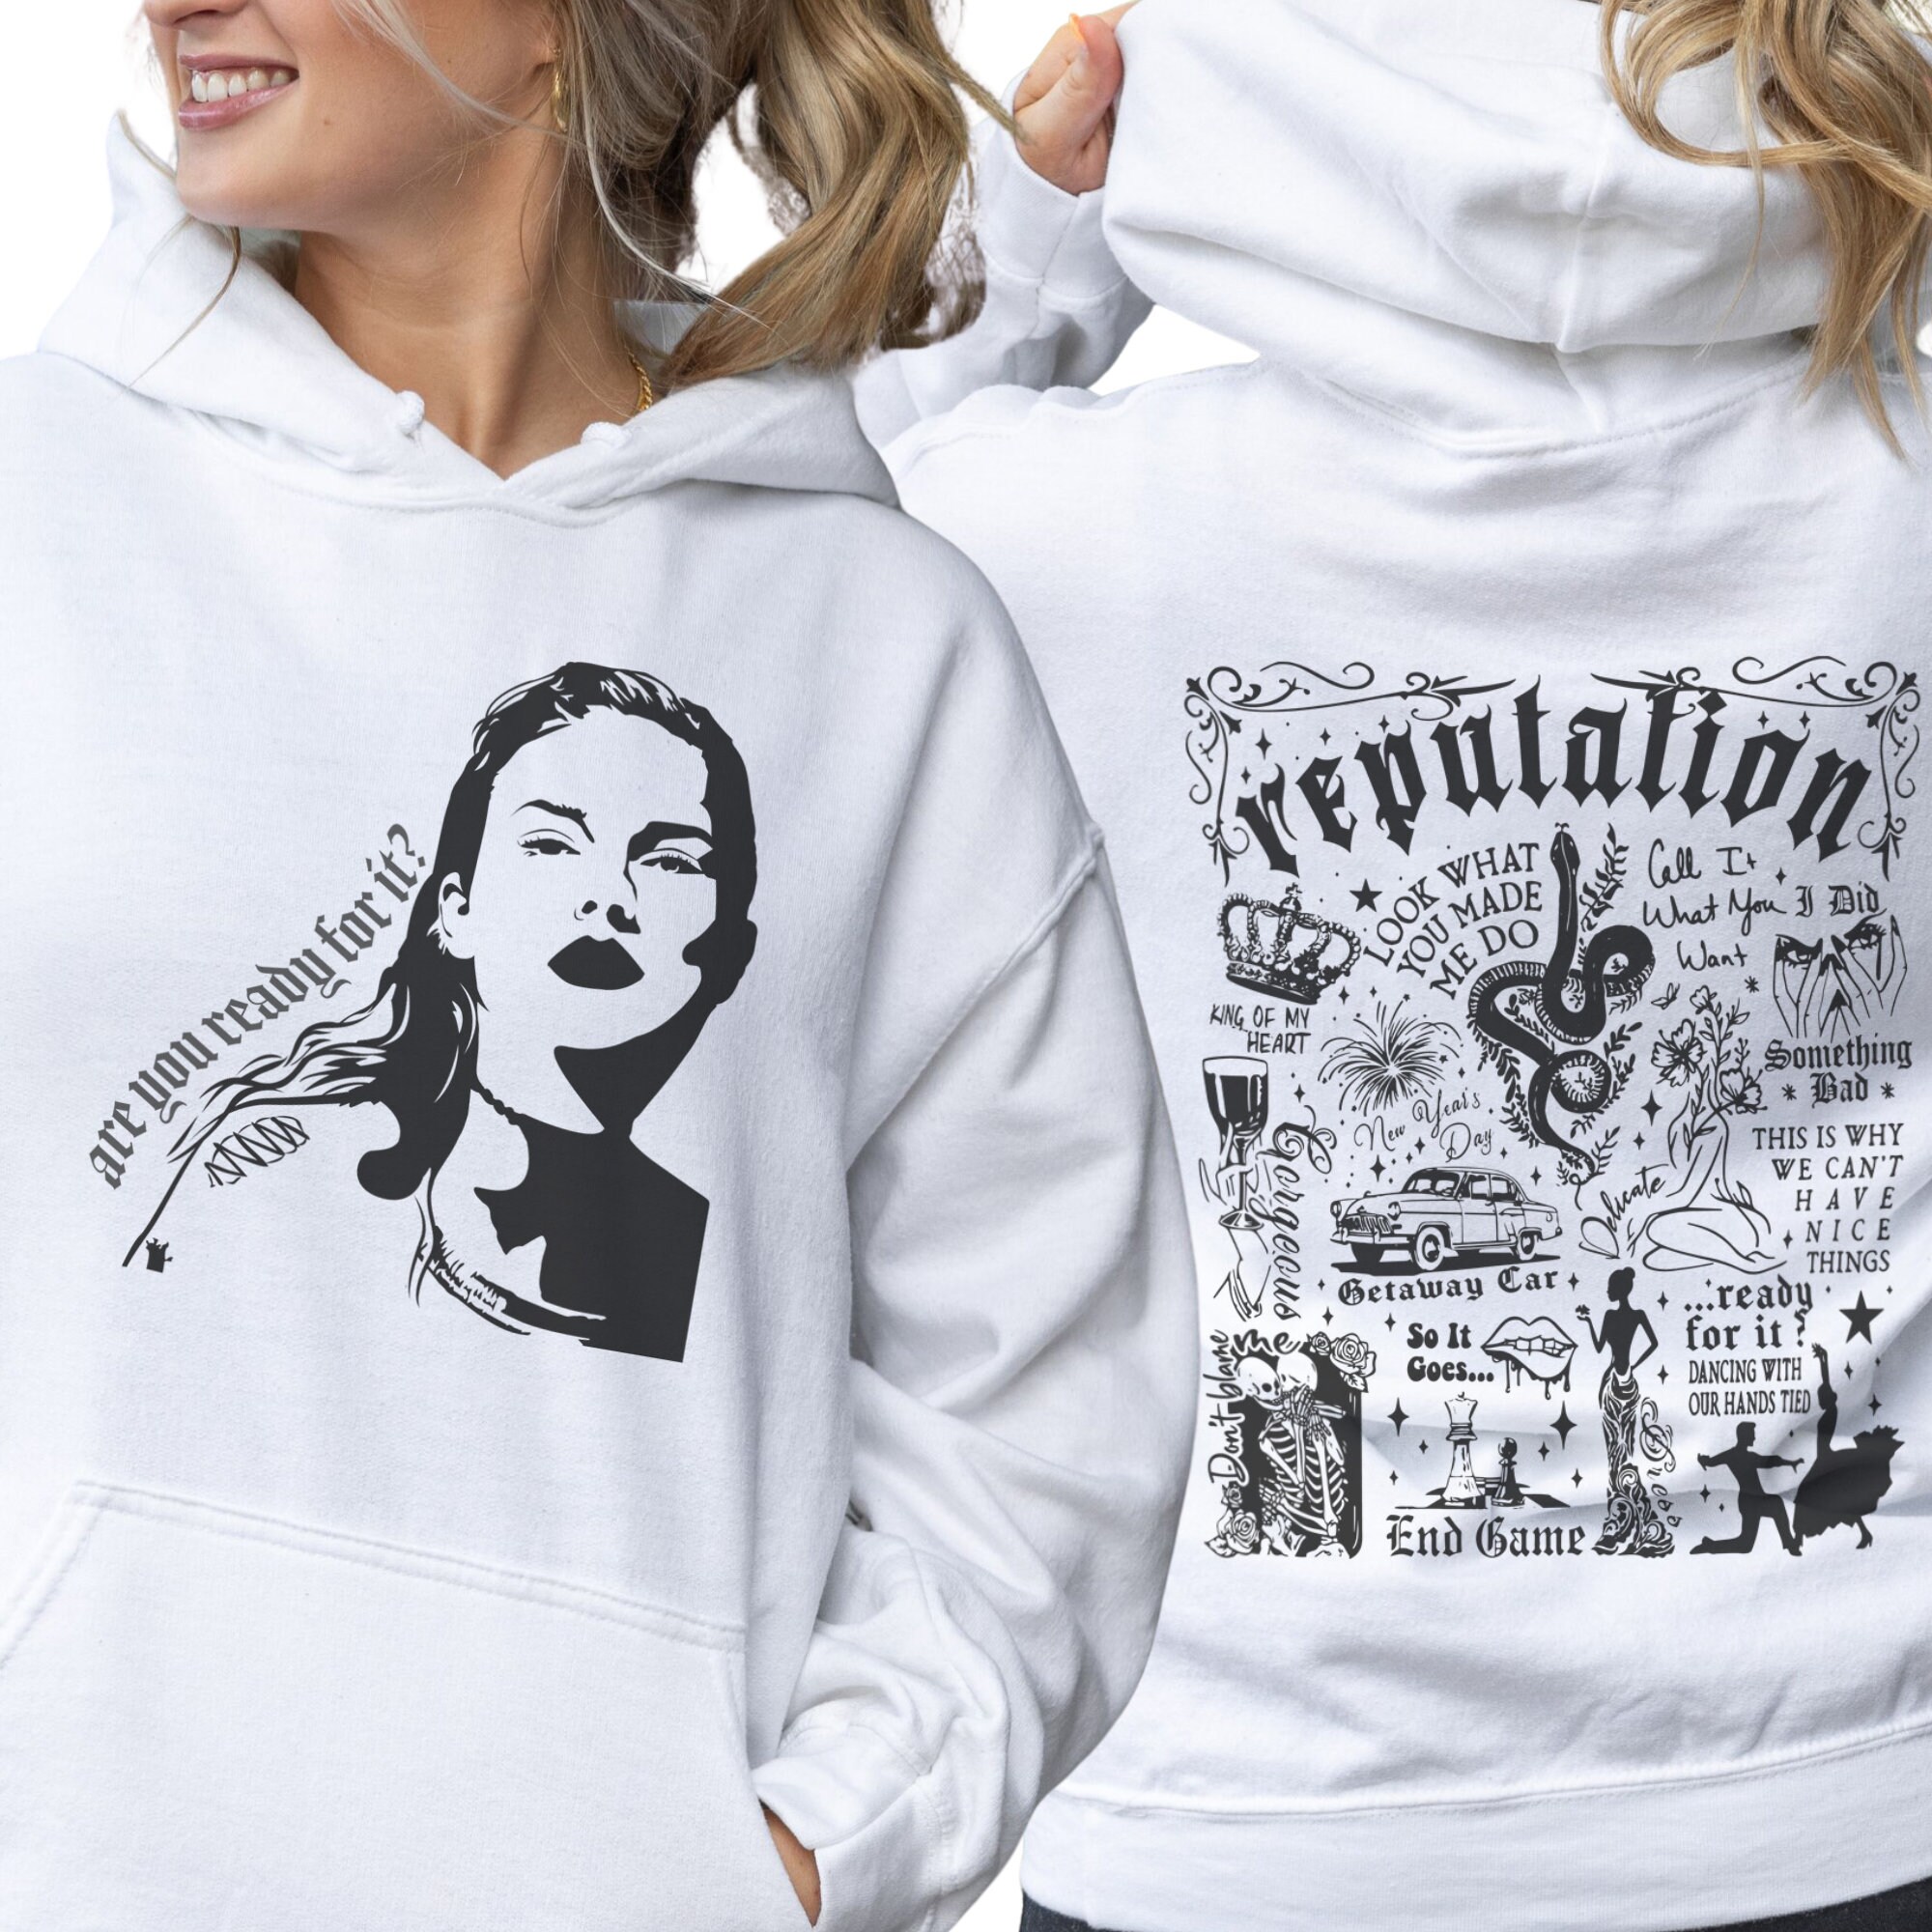 Reputation-Sweatshirt-510×510  Taylor swift merchandise, Sweatshirts,  White sweatshirt